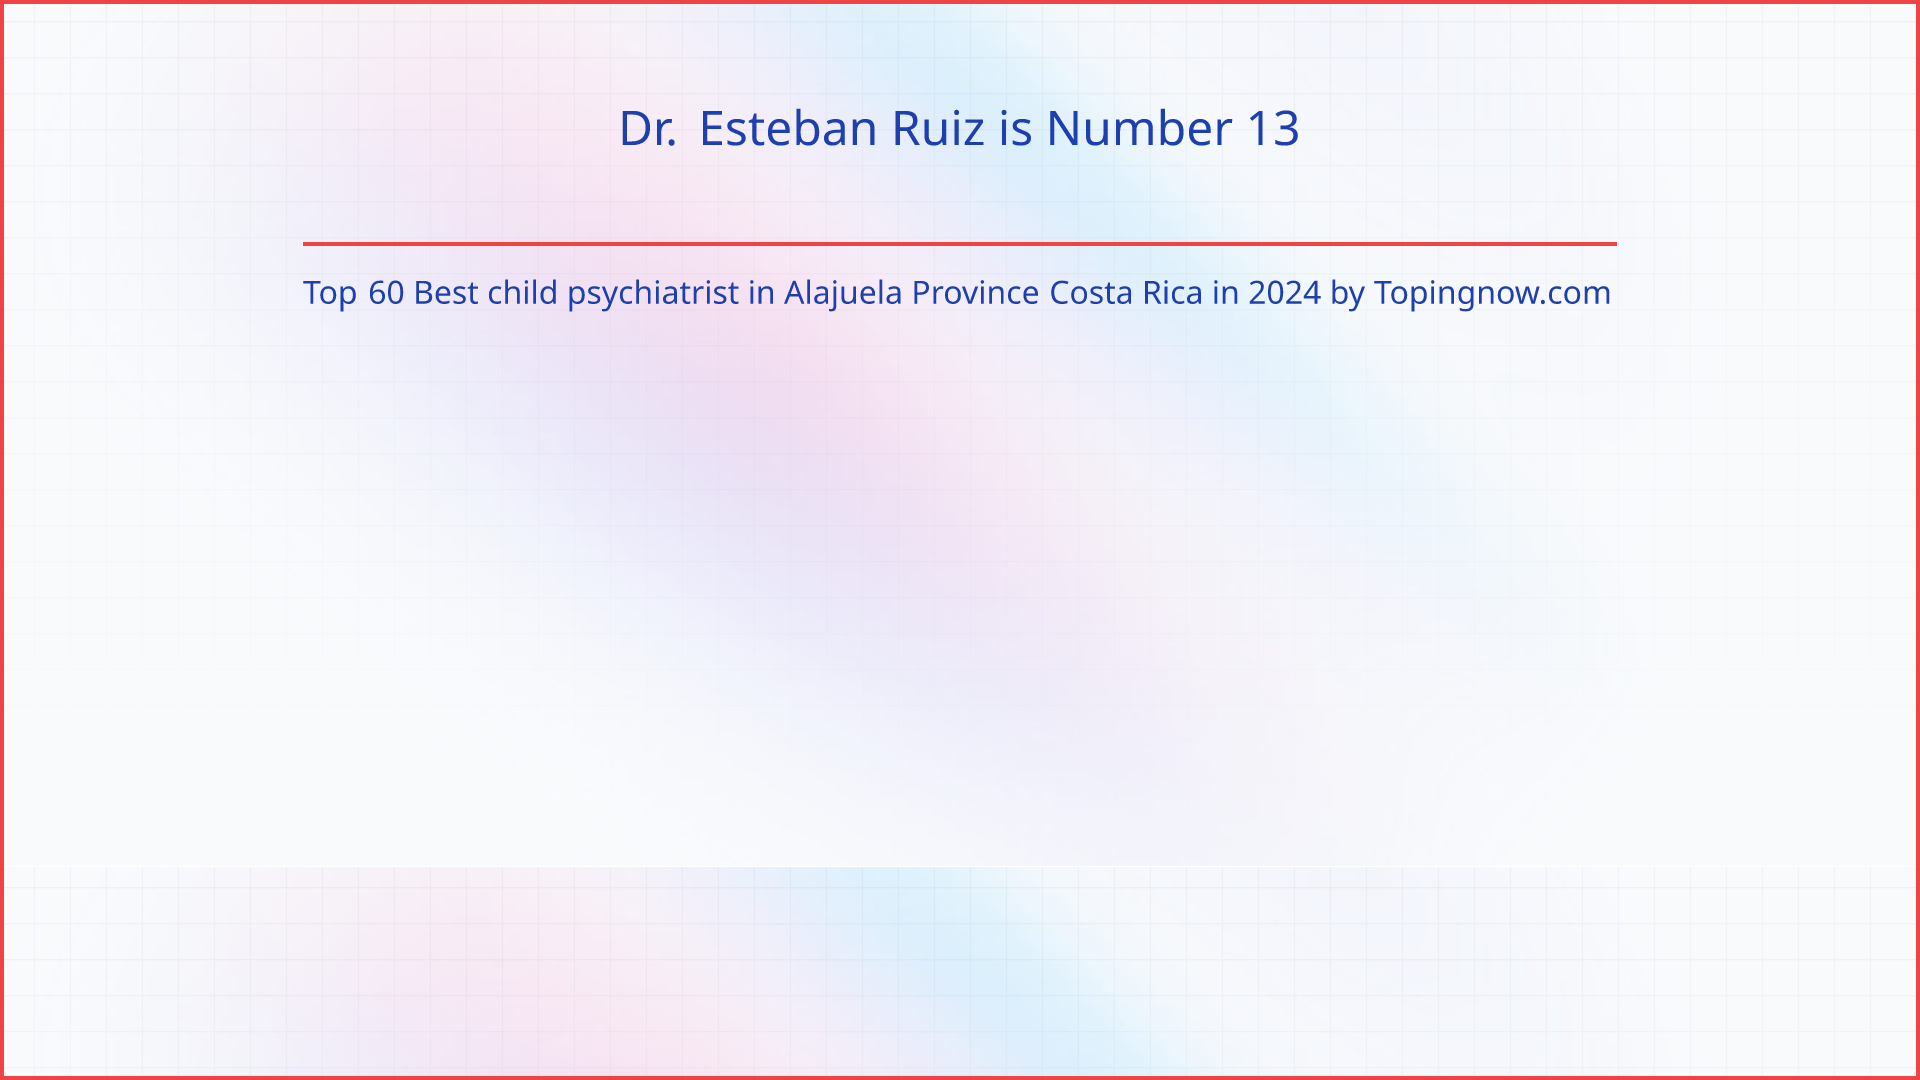 Dr. Esteban Ruiz: Top 60 Best child psychiatrist in Alajuela Province Costa Rica in 2024